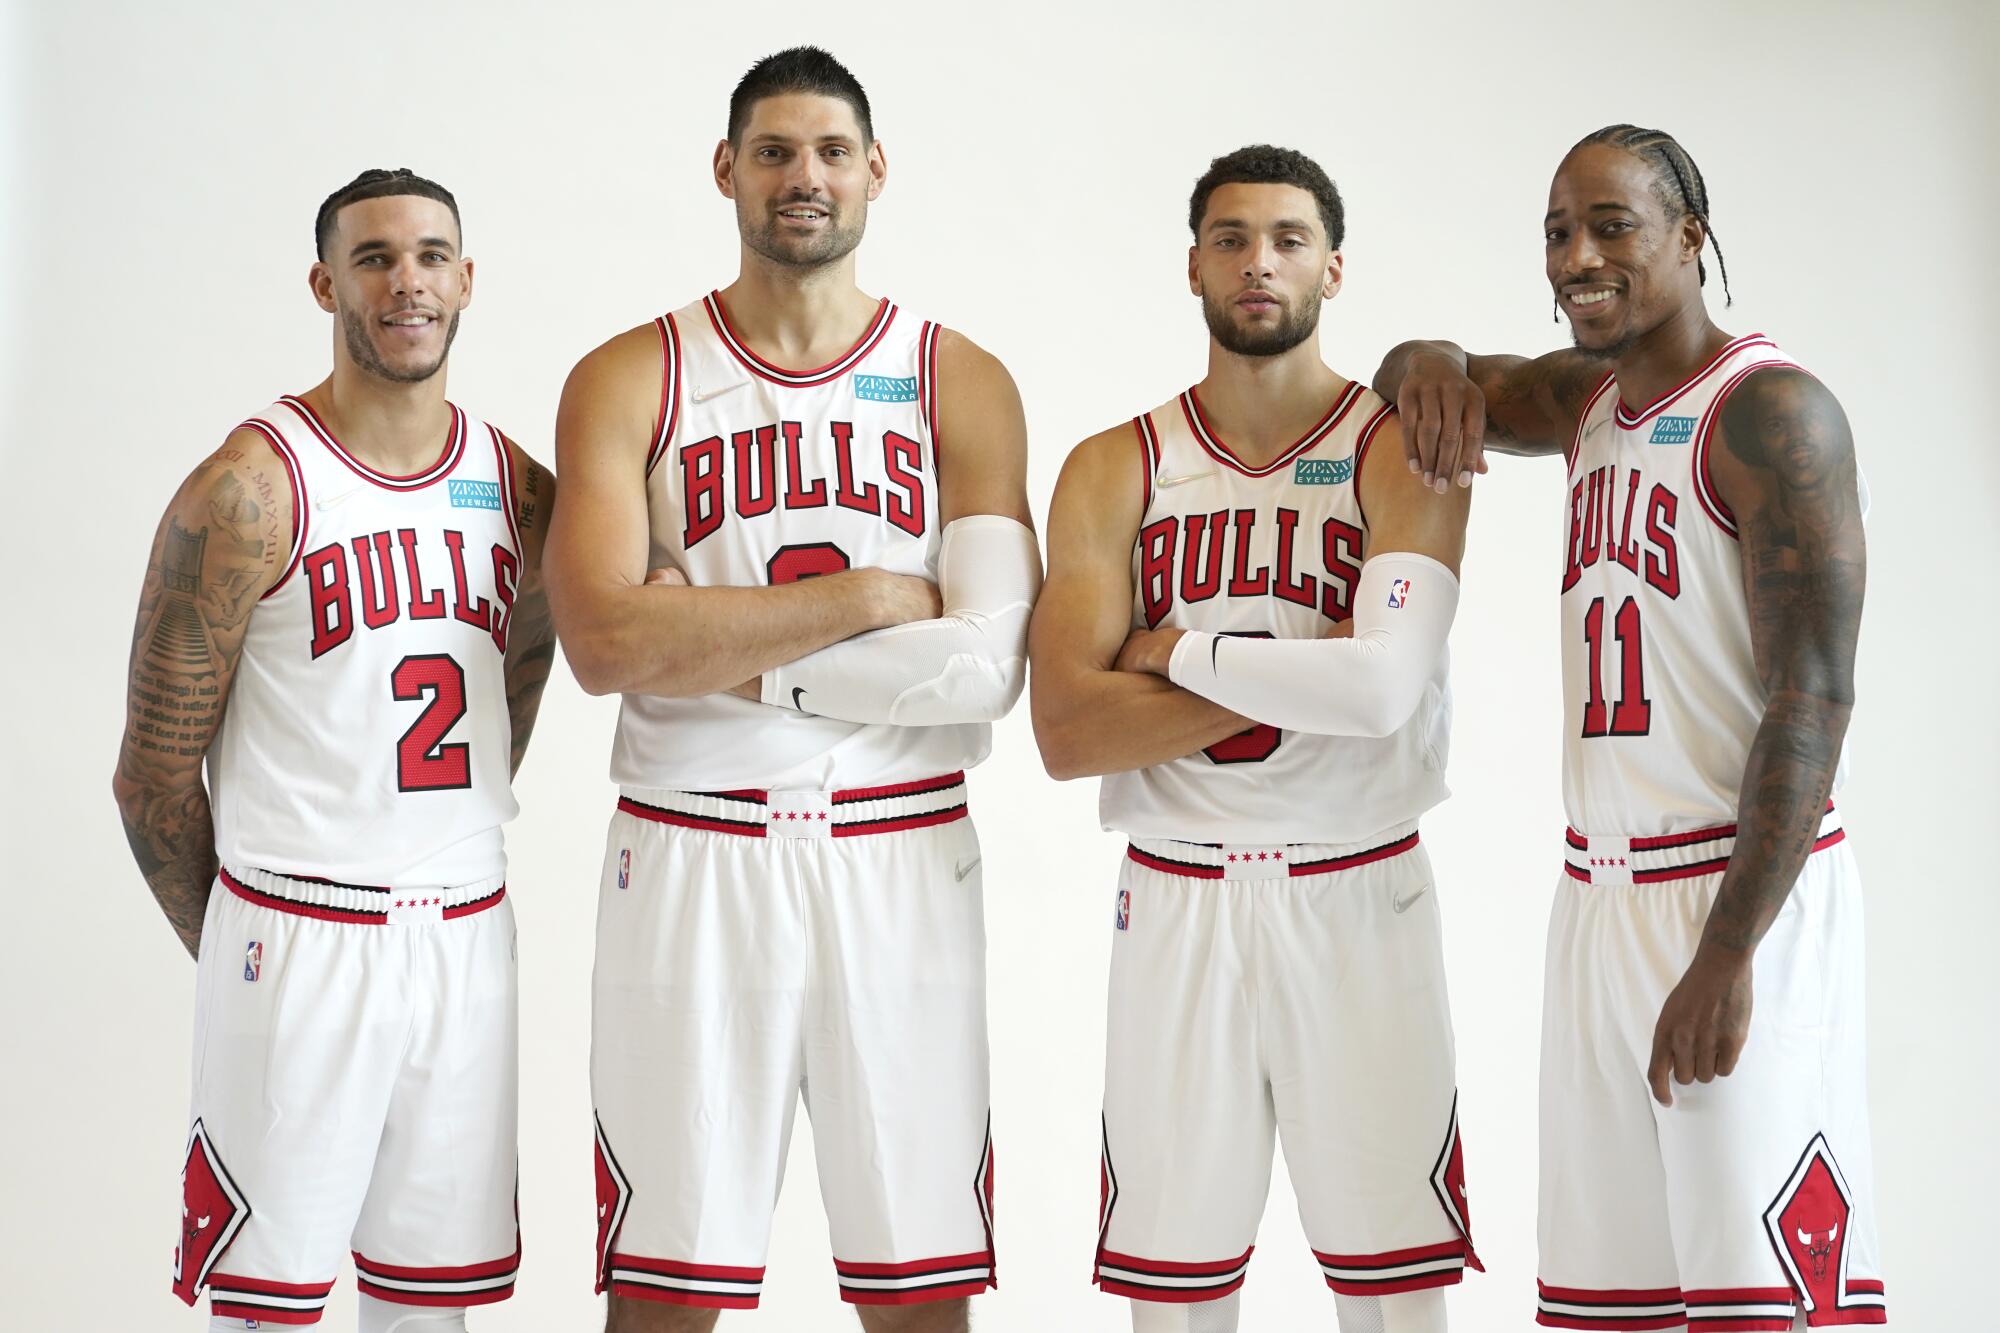 Bulls players, from left, Lonzo Ball, Nikola Vucevic, Zach LaVine and DeMar DeRozan